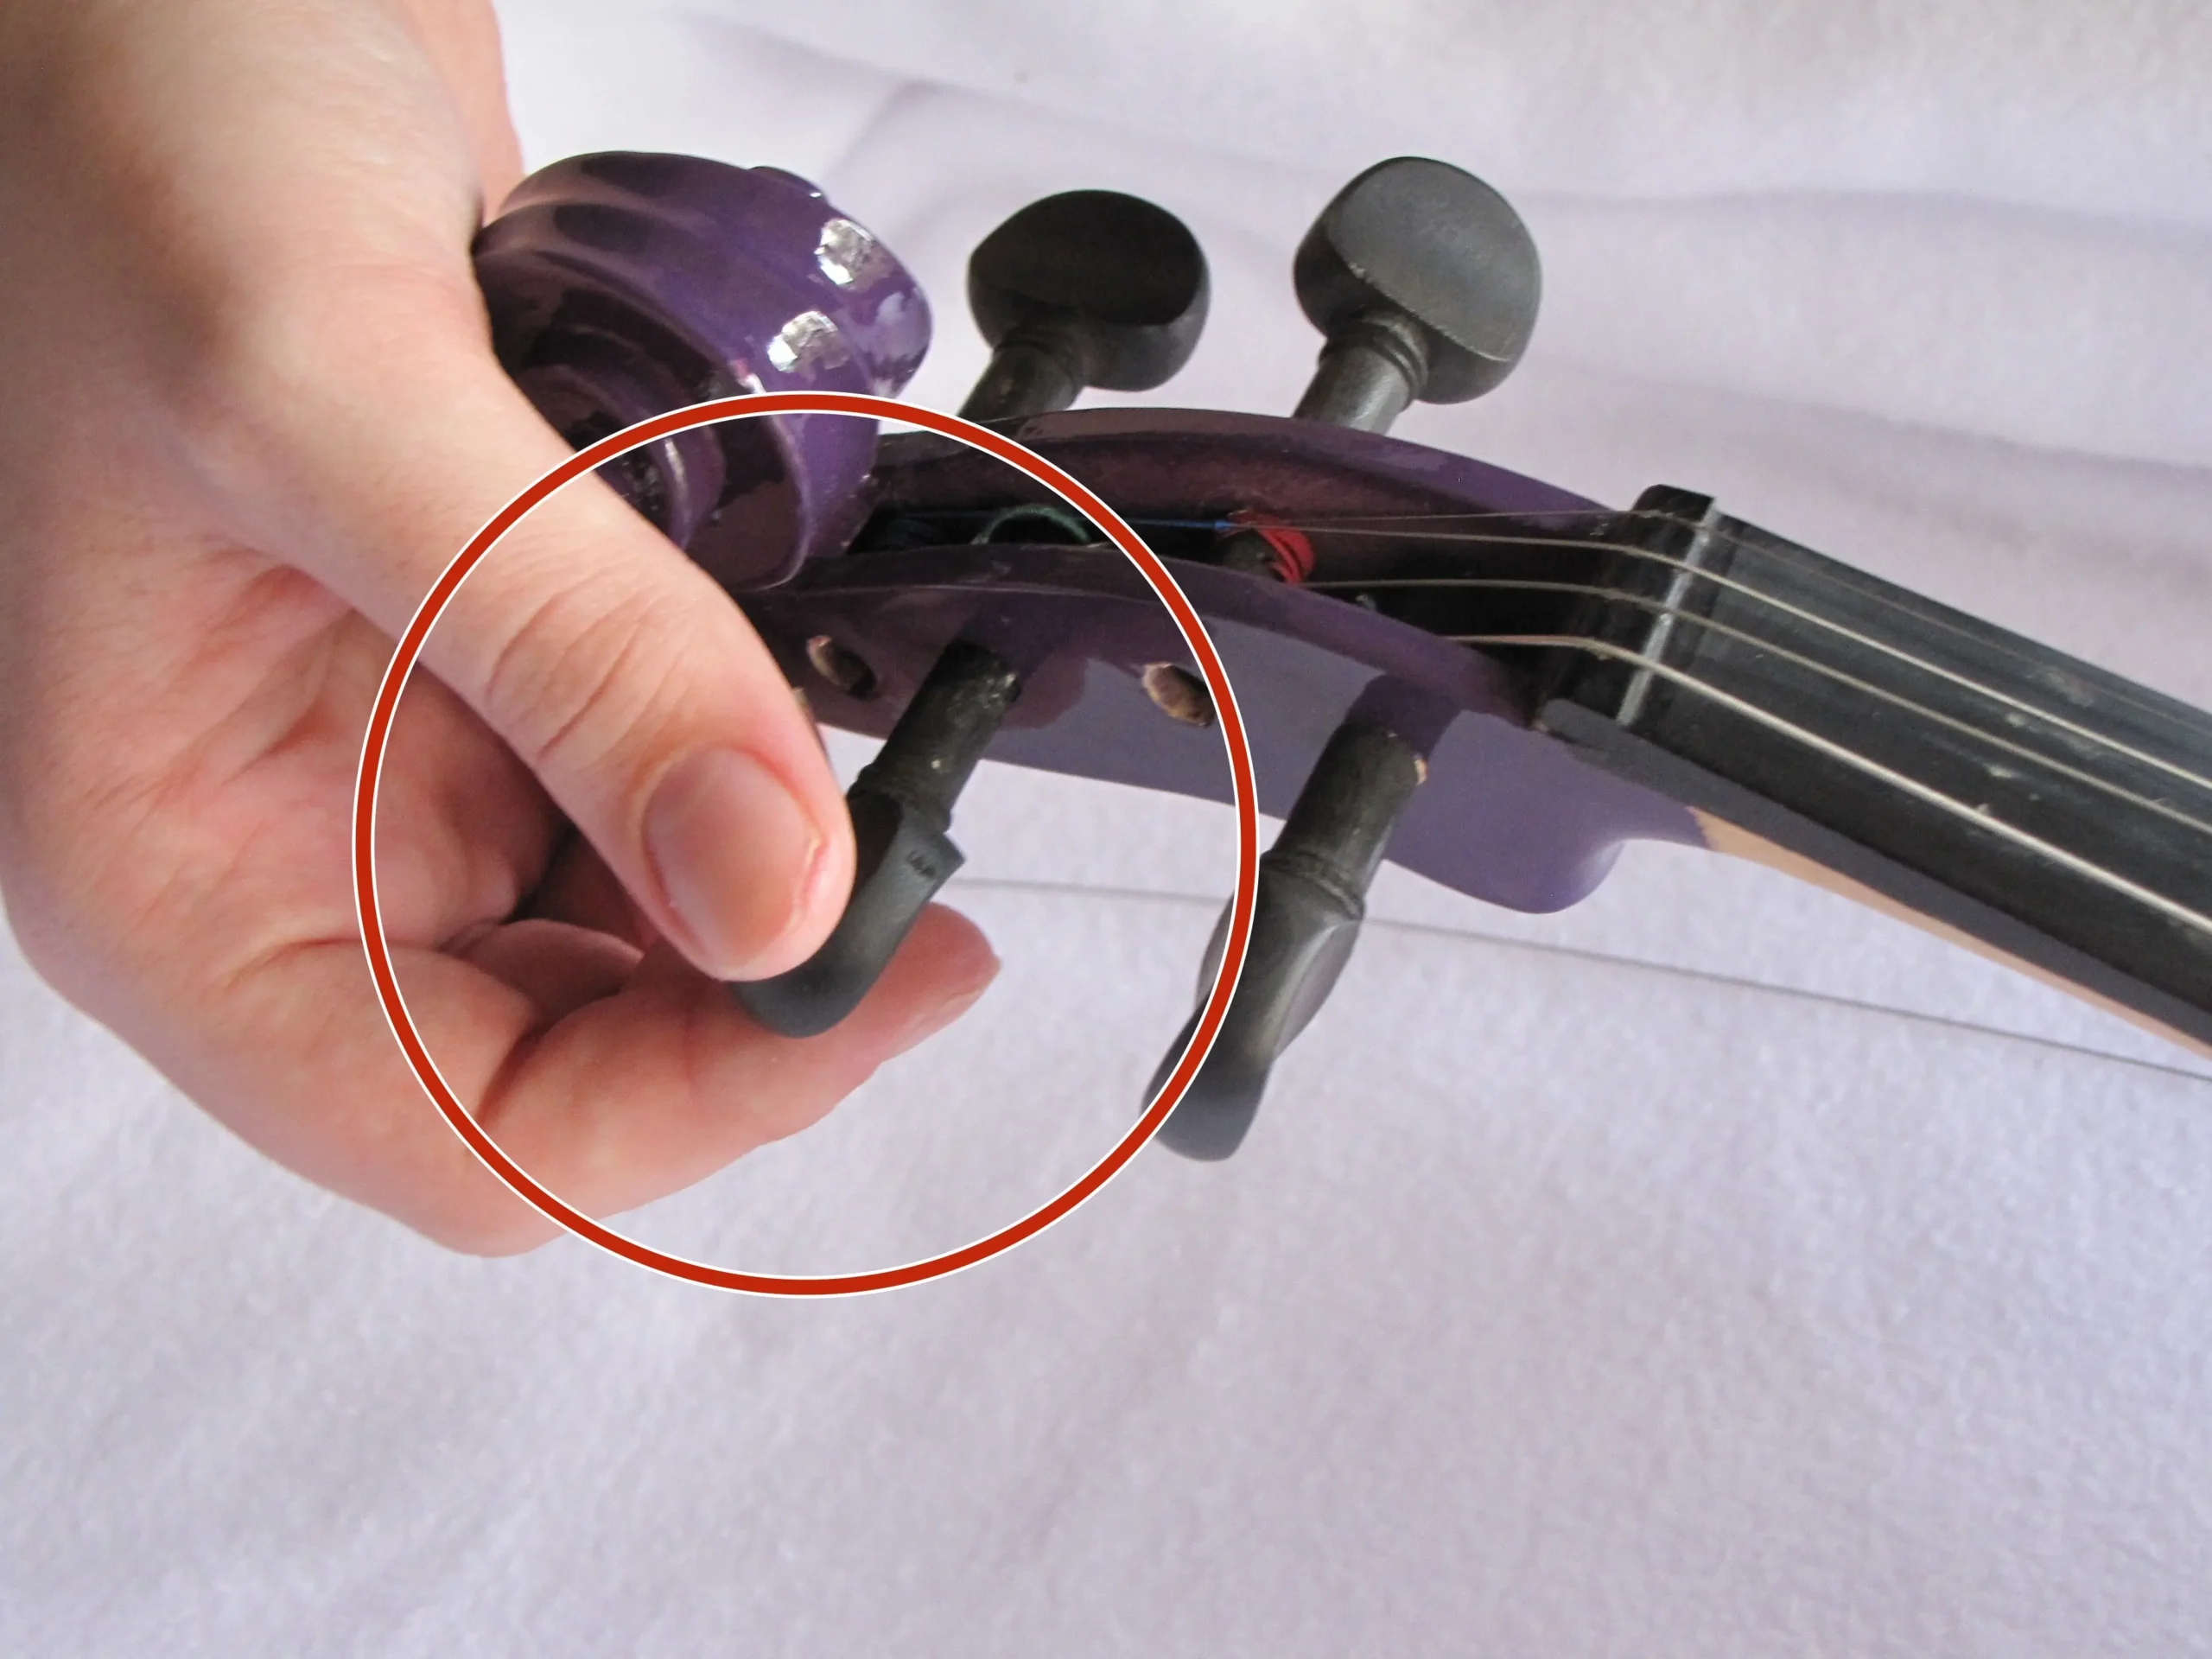 violin string broke while tuning - How easily do violin strings break